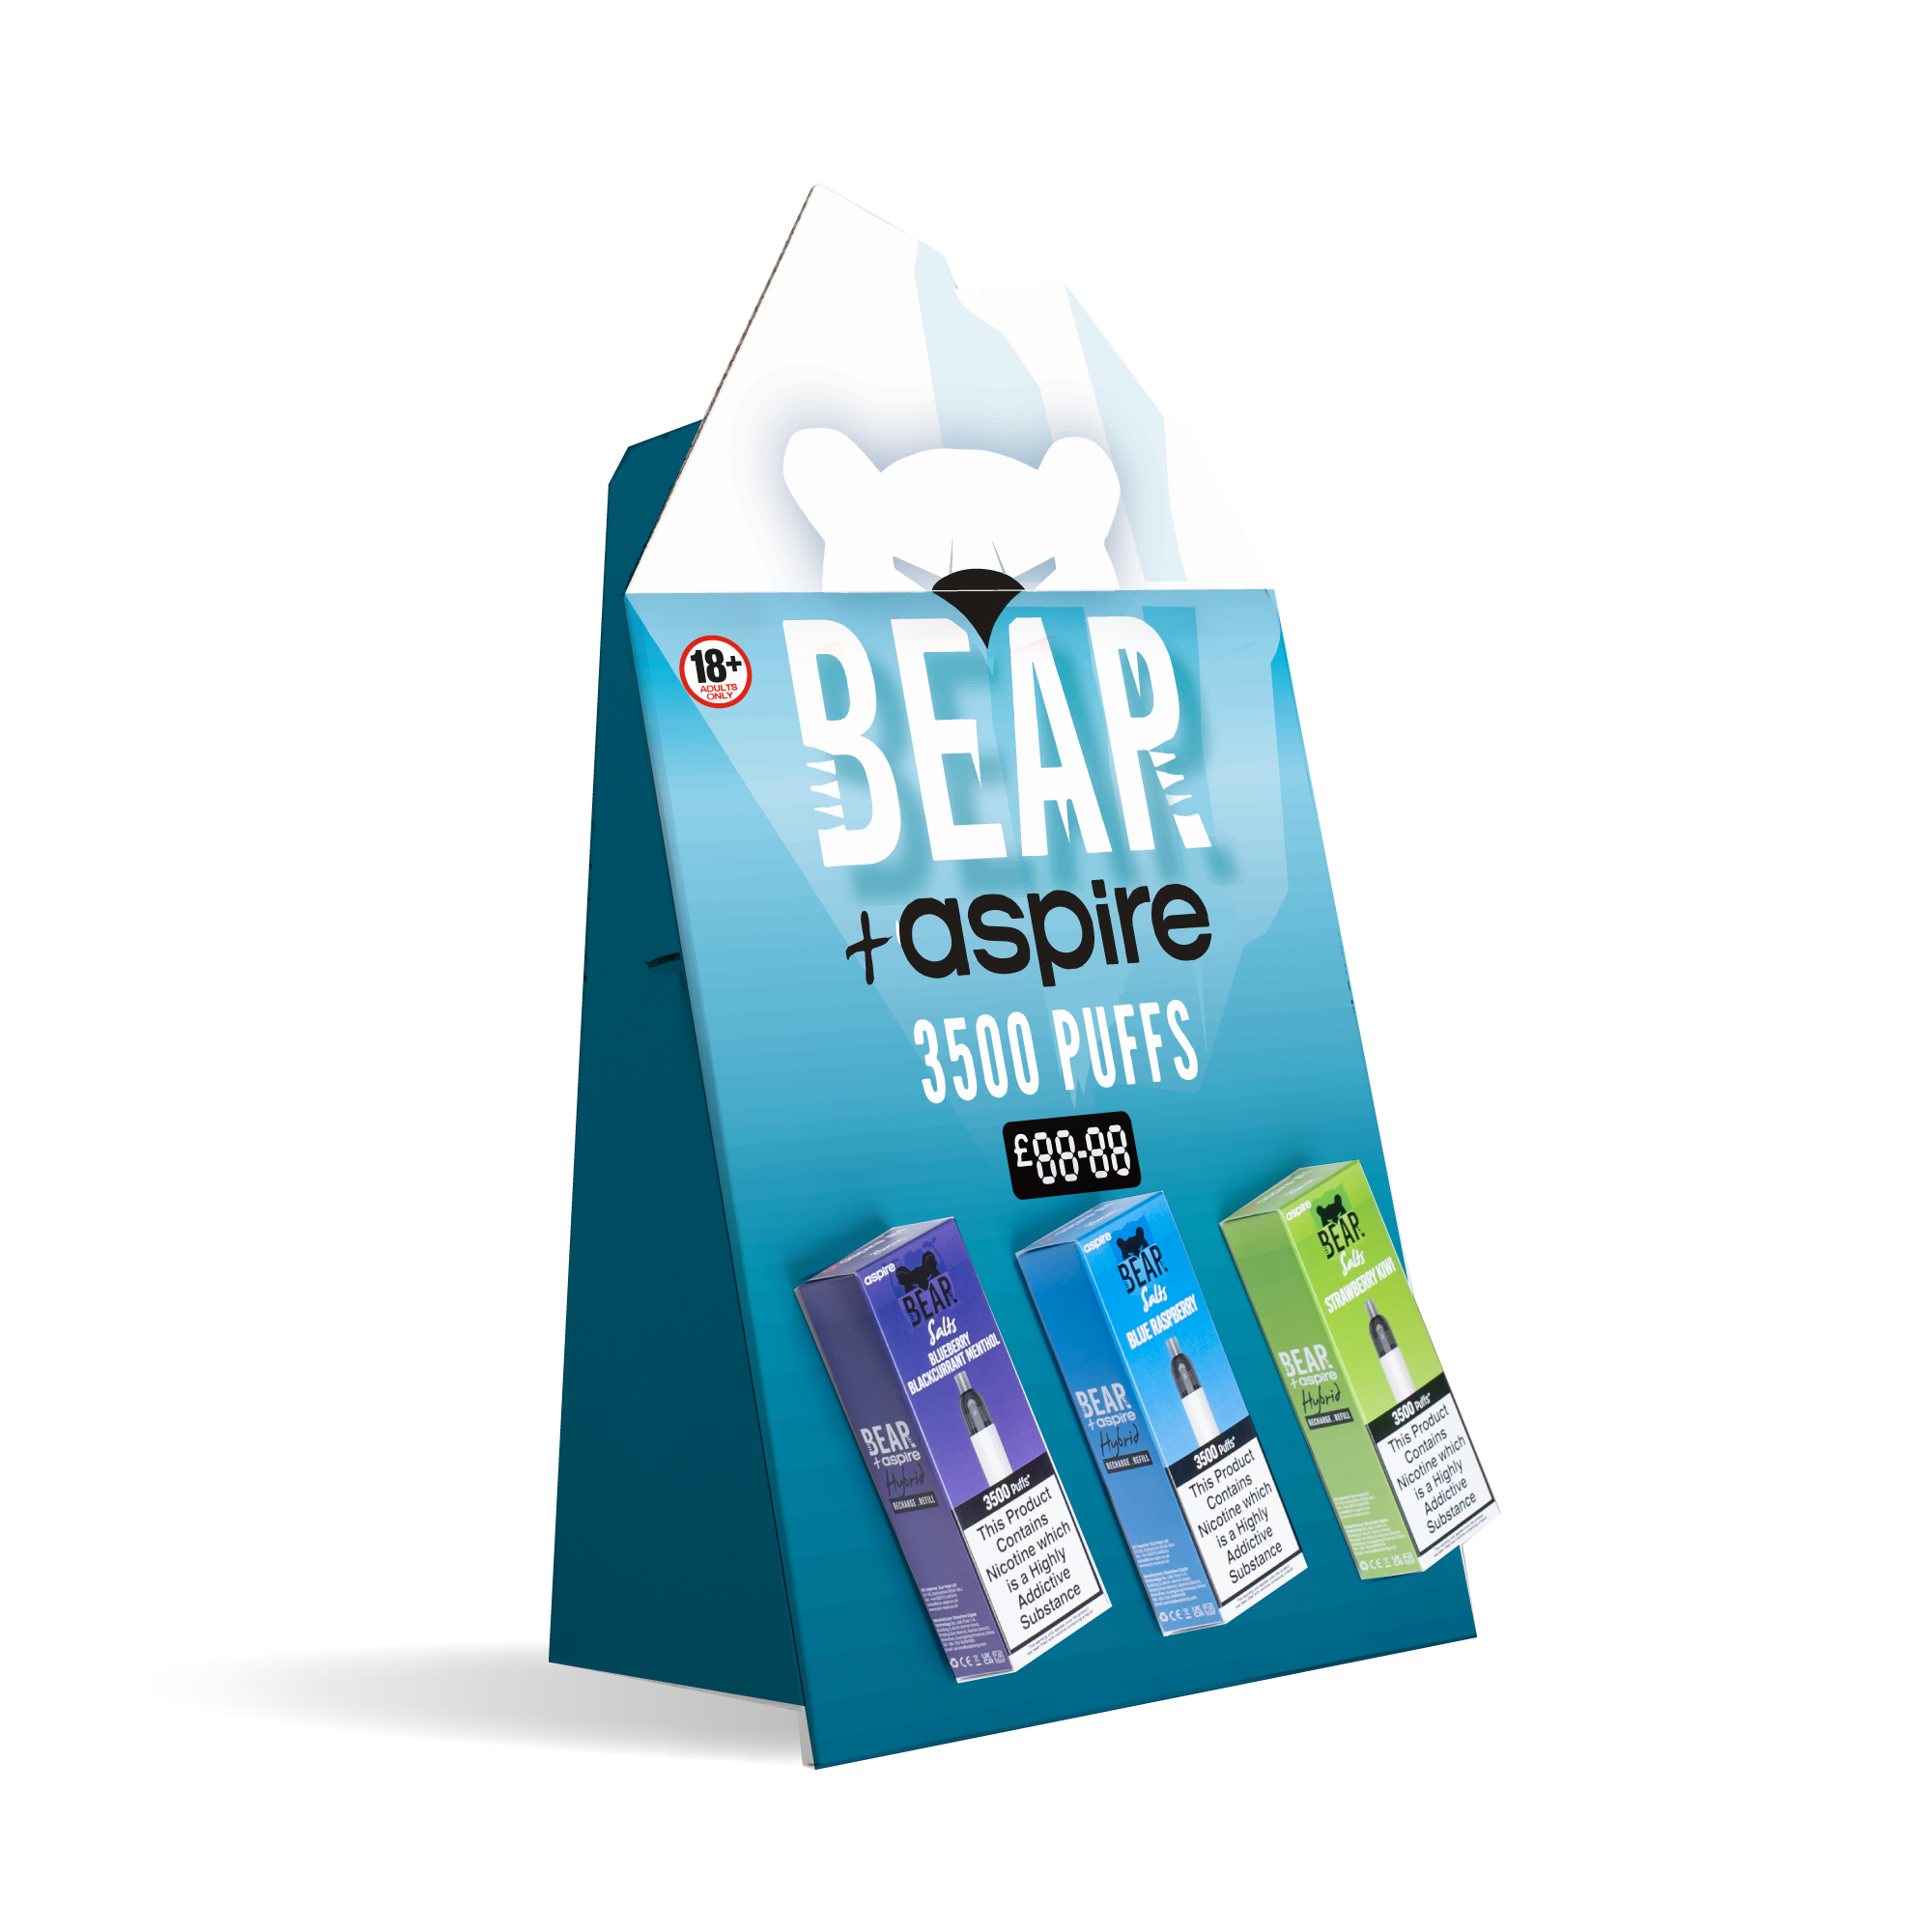 BEAR+Aspire R1 A3 Counter Top Board